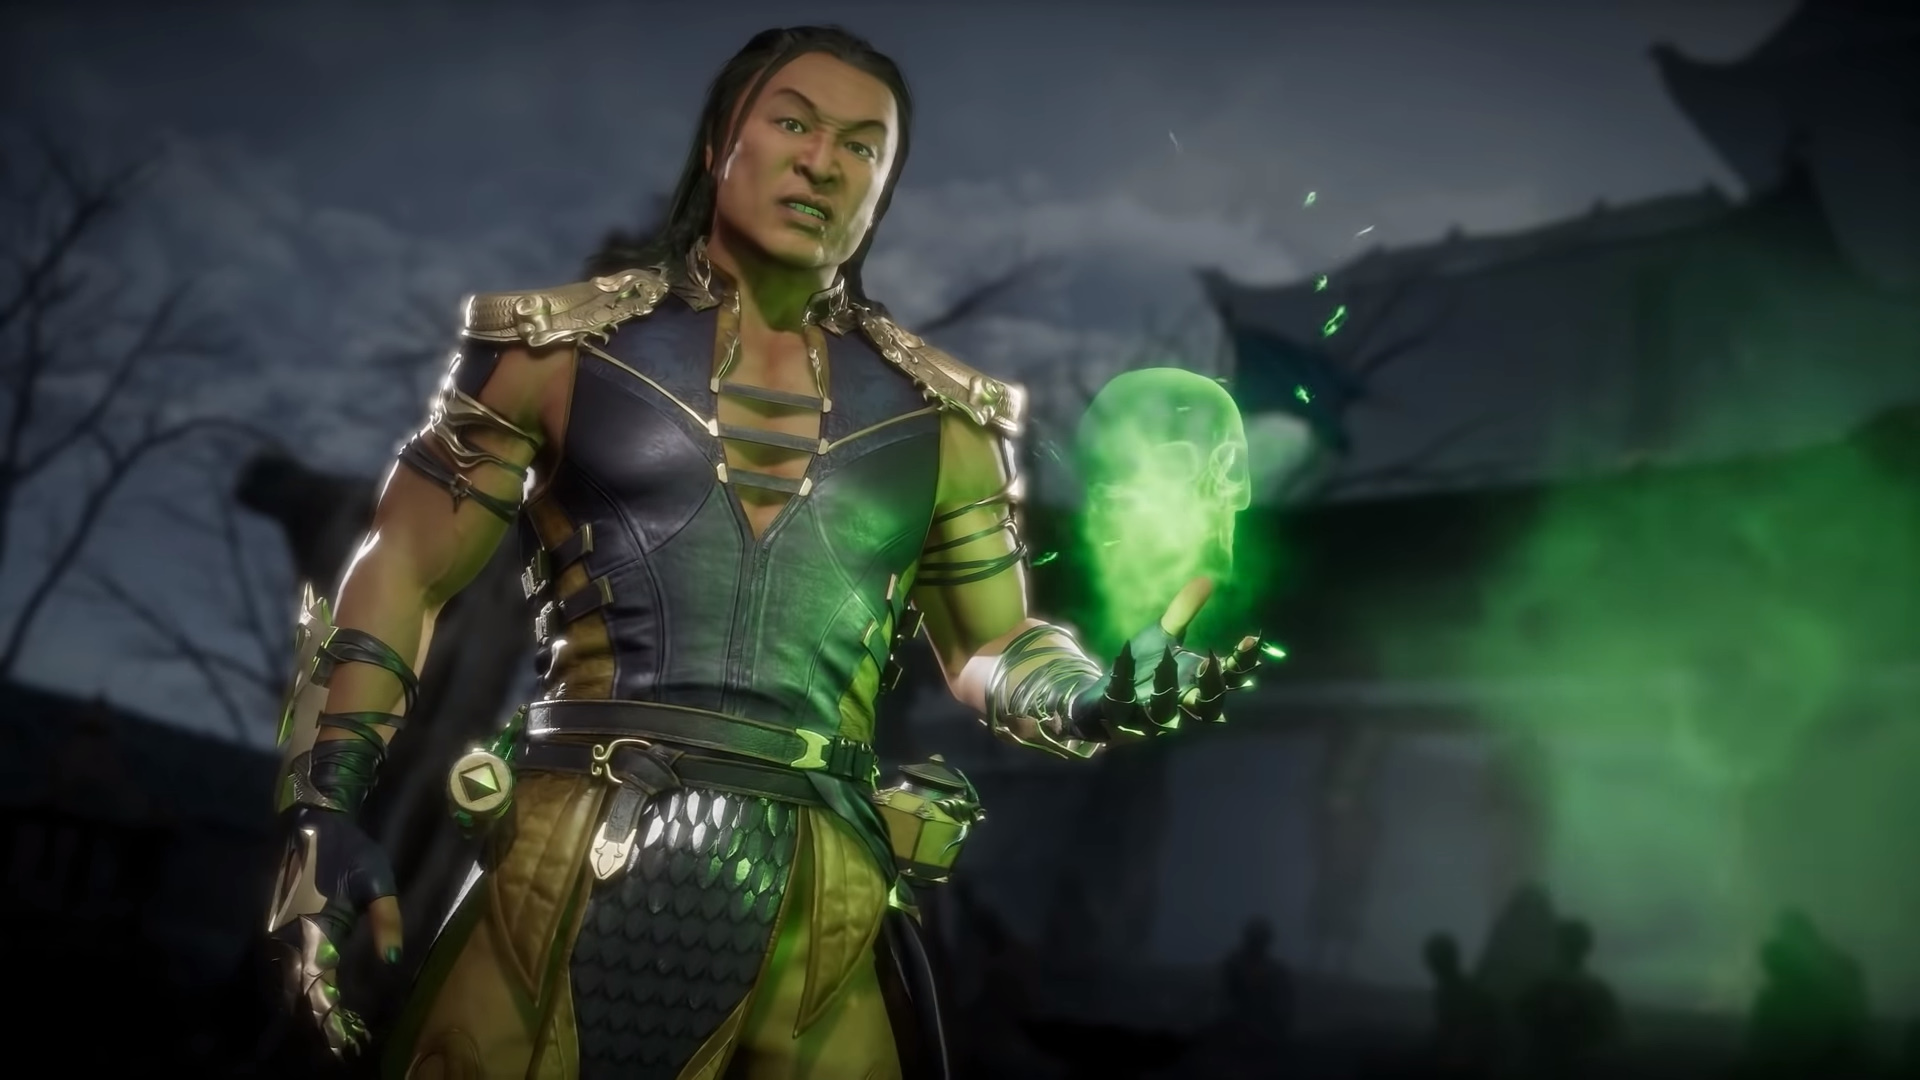 Mortal Kombat 11 (MK11) Shang Tsung DLC Release Date Guide